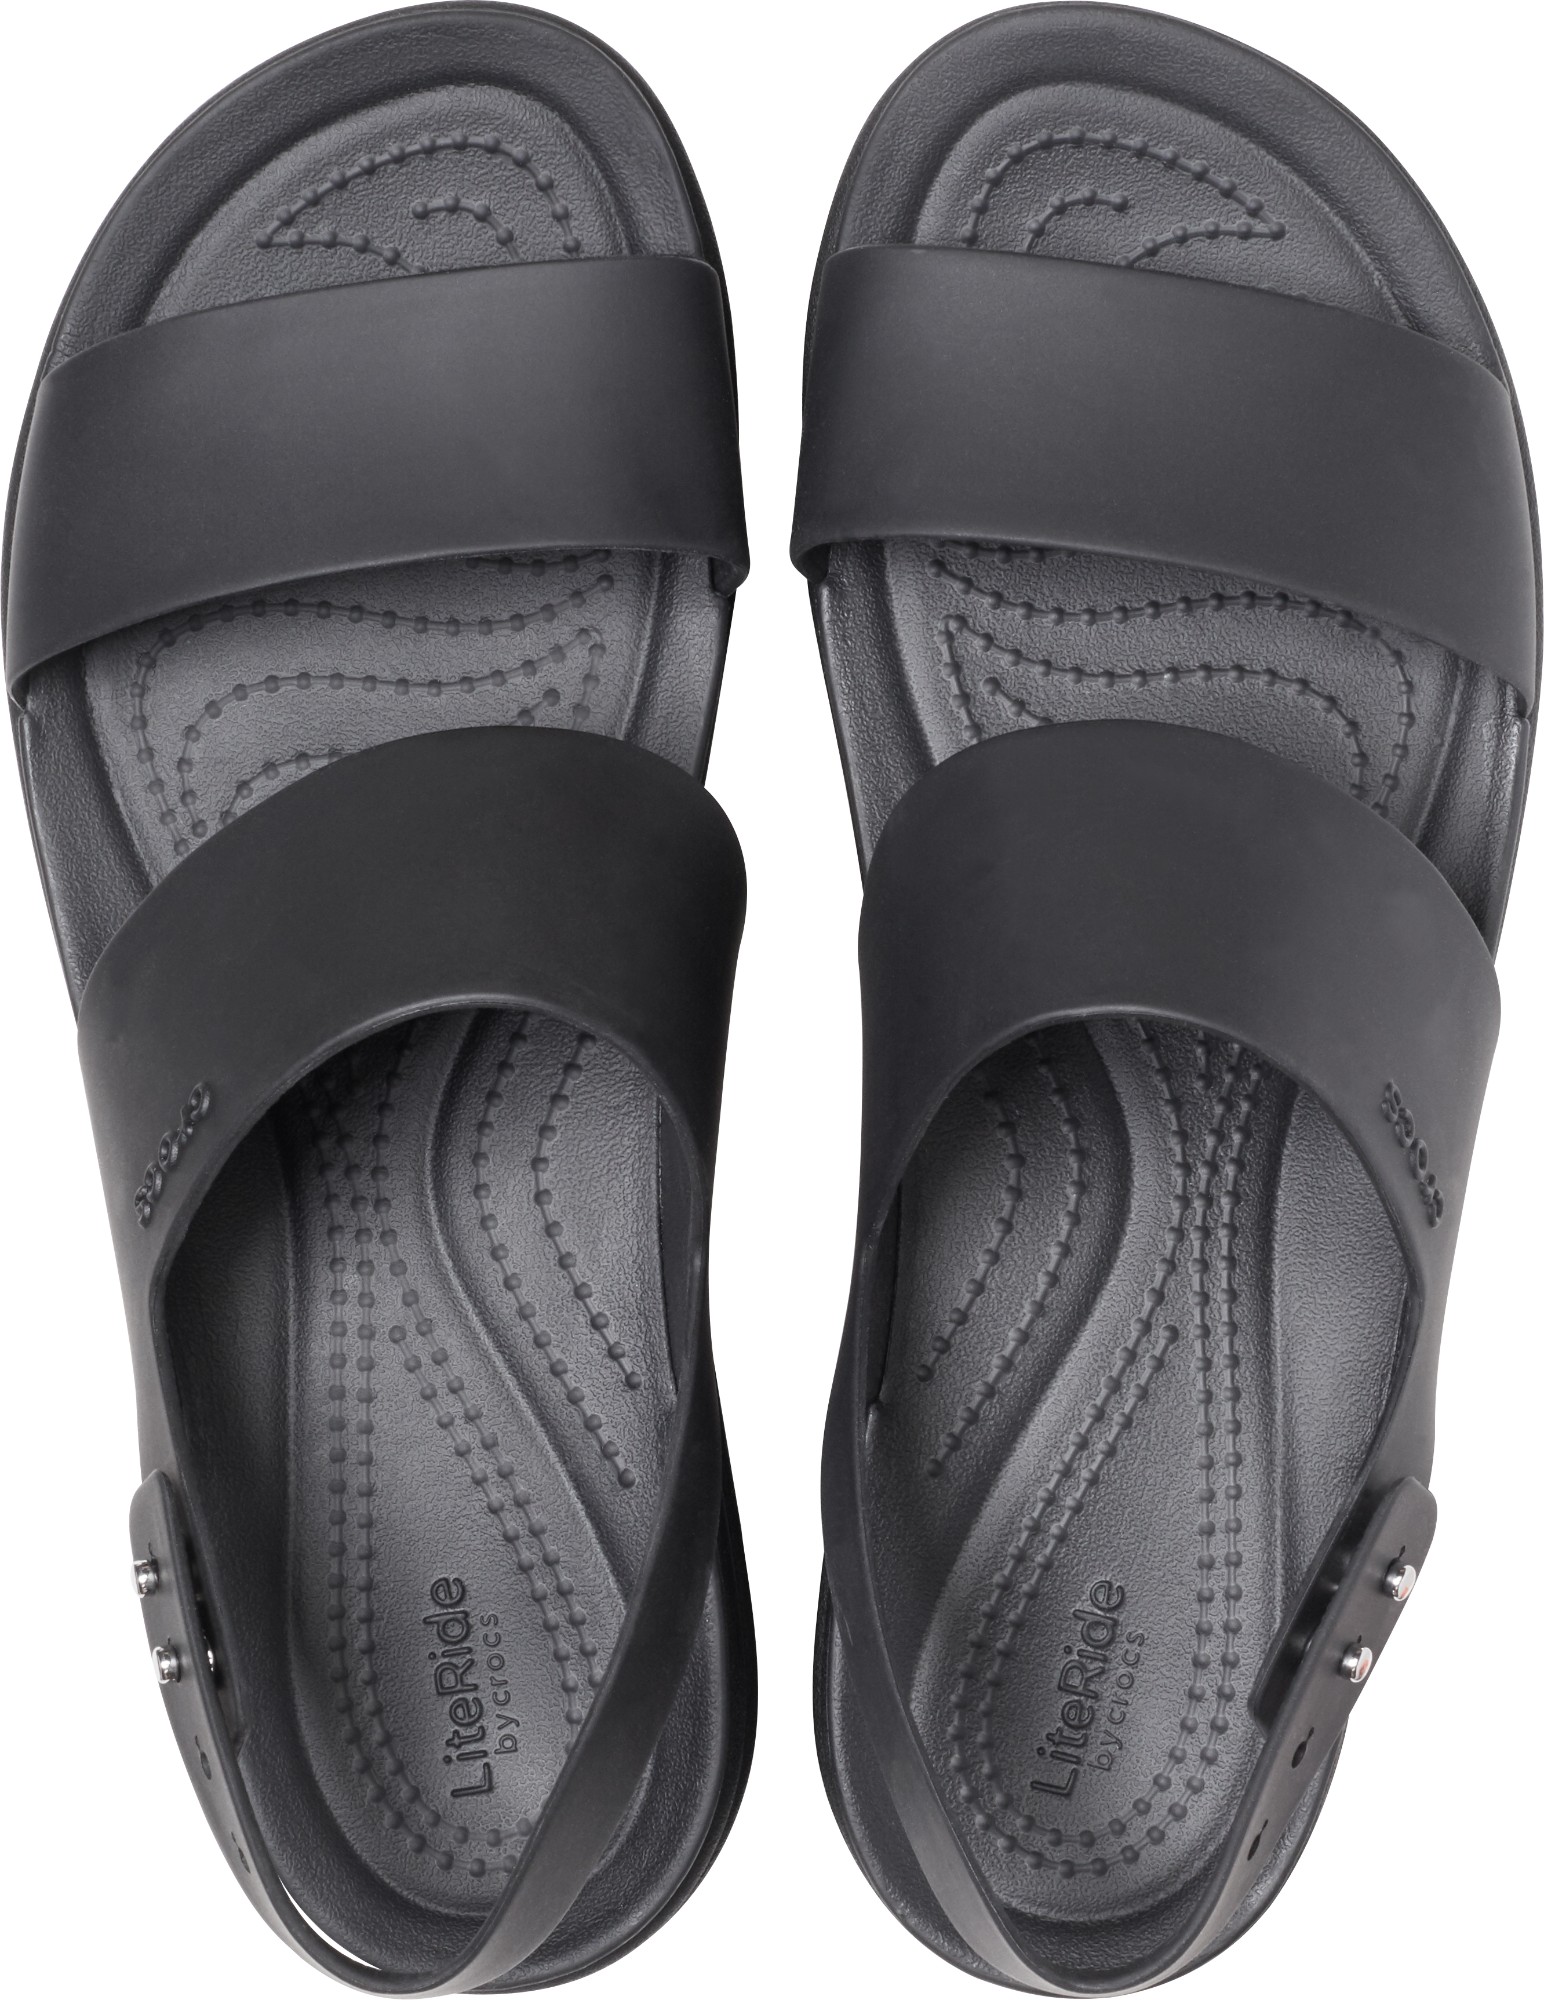 Crocs Brooklyn Low Wedge Womens Sandals Heels - Multiple Color Options ...